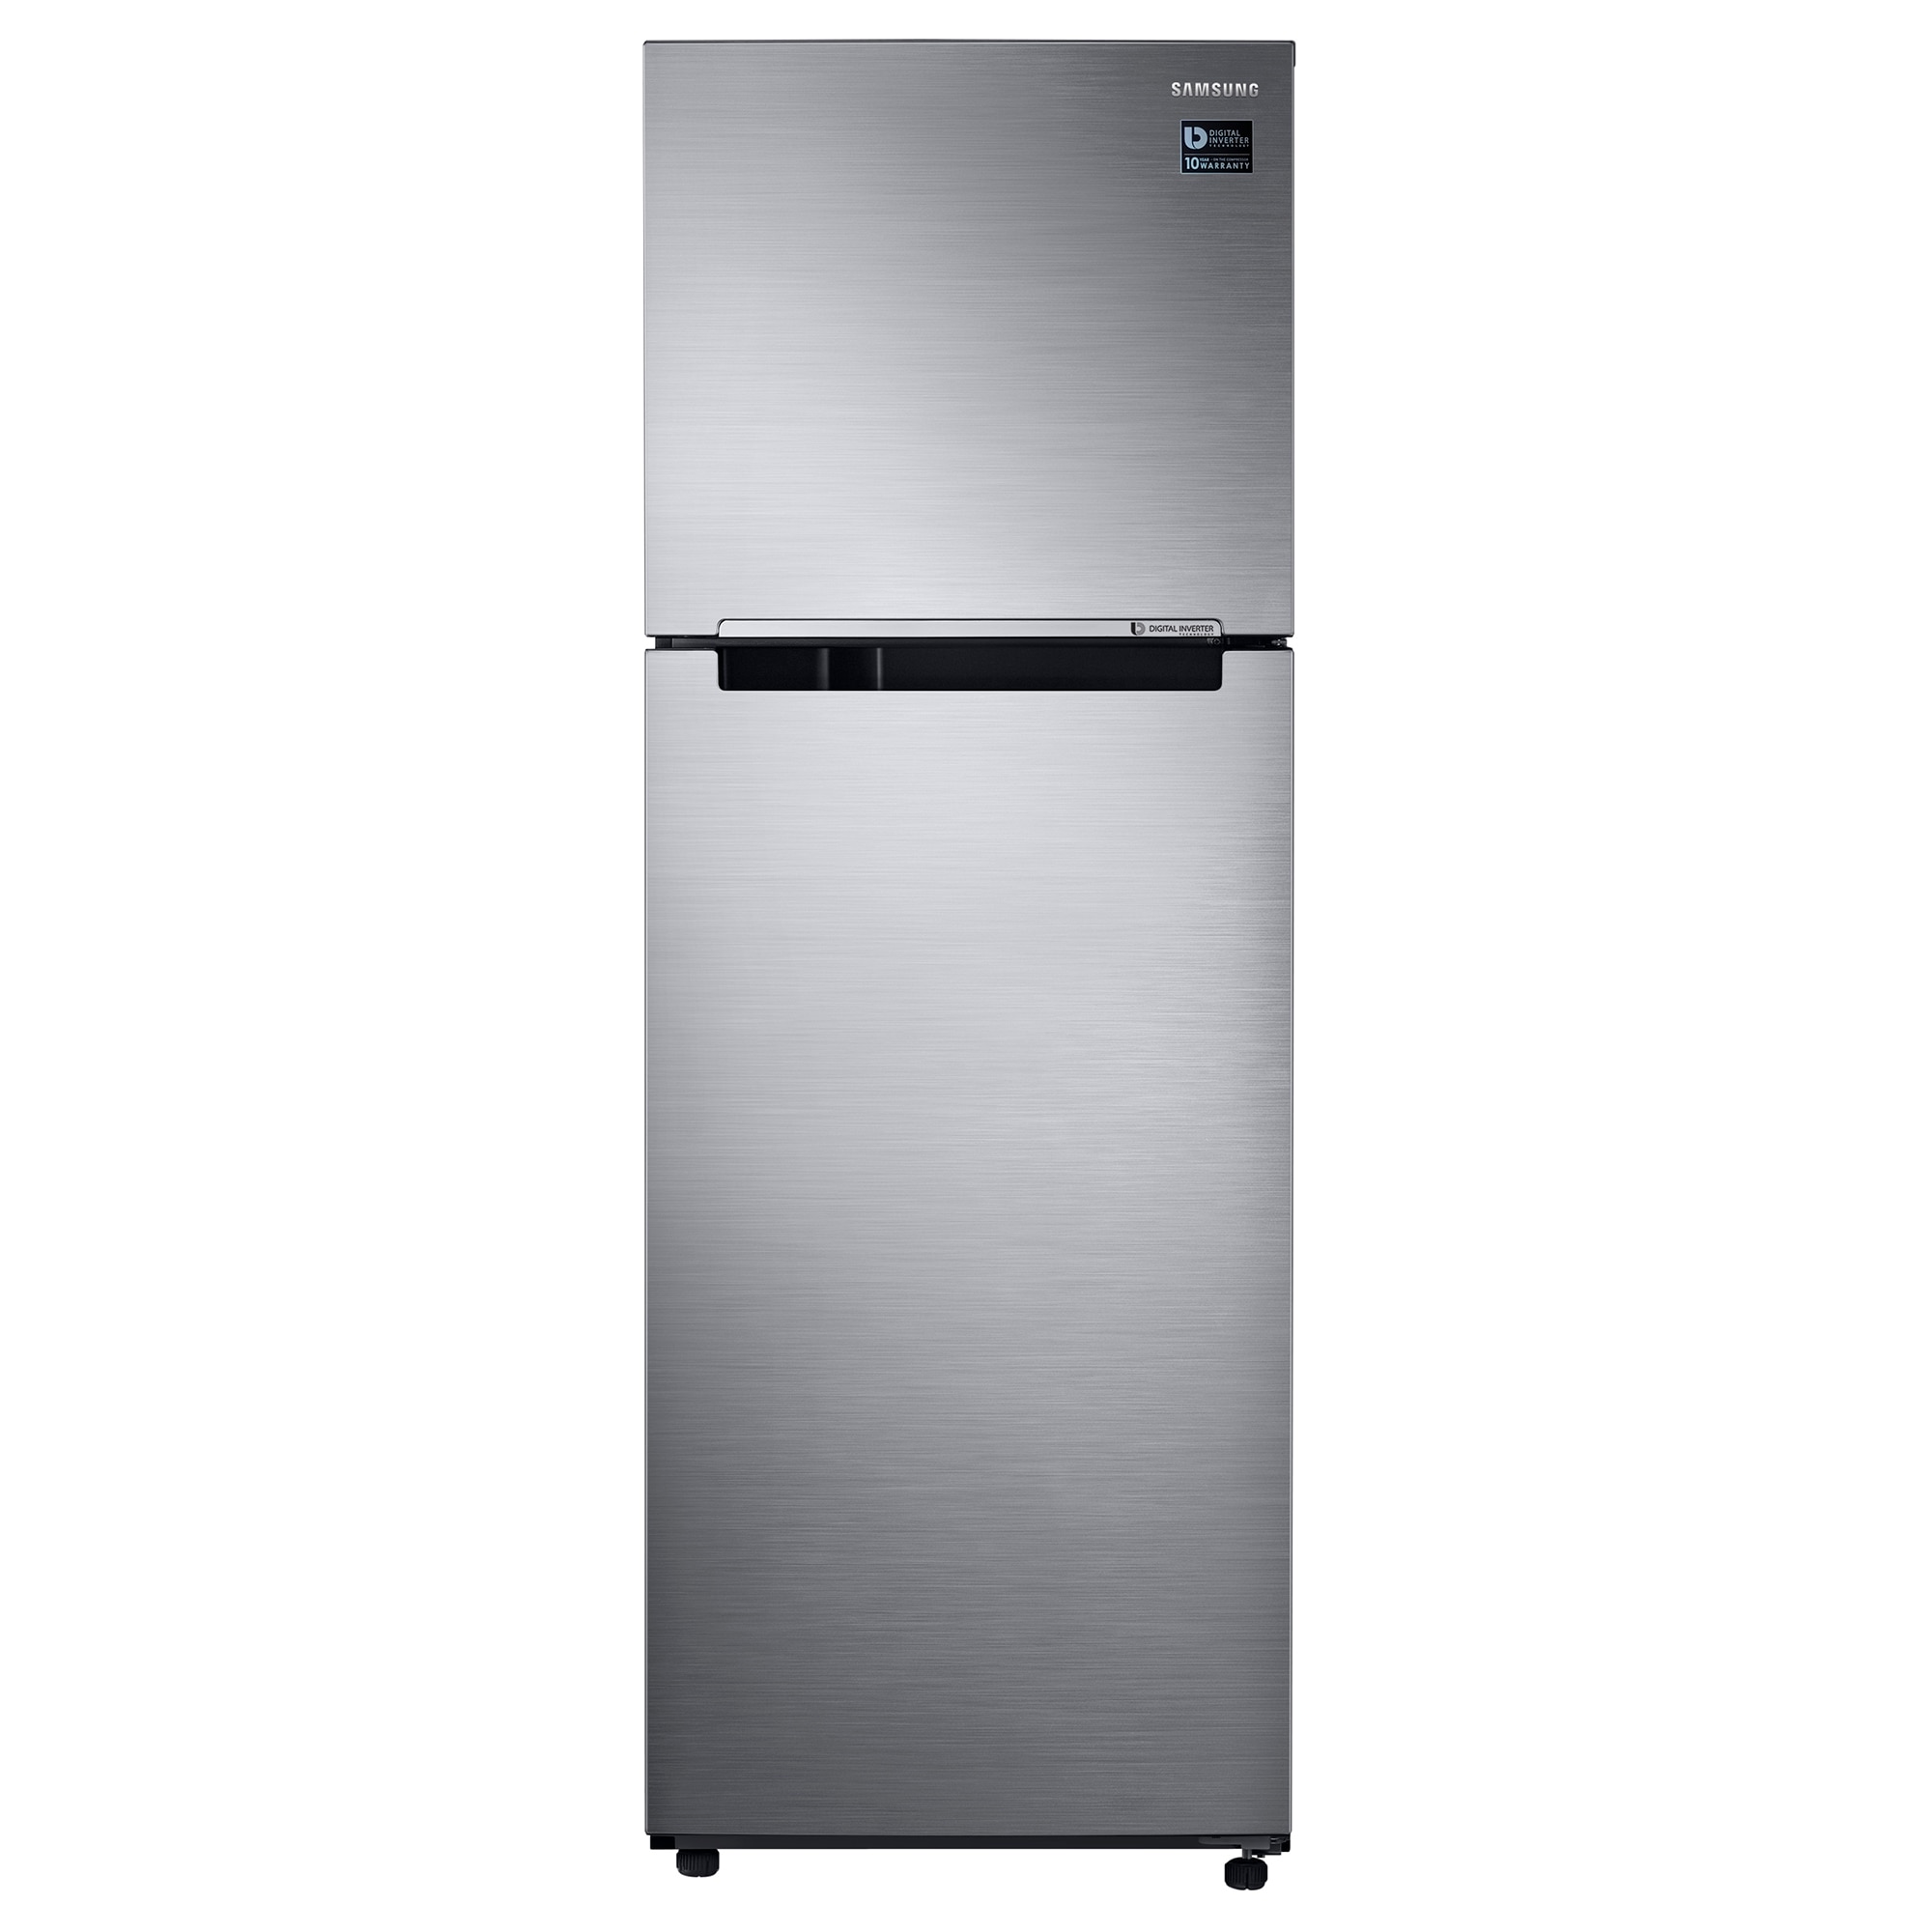 Хладилник Samsung RT32K5030S9/EO с обем от 321 л.